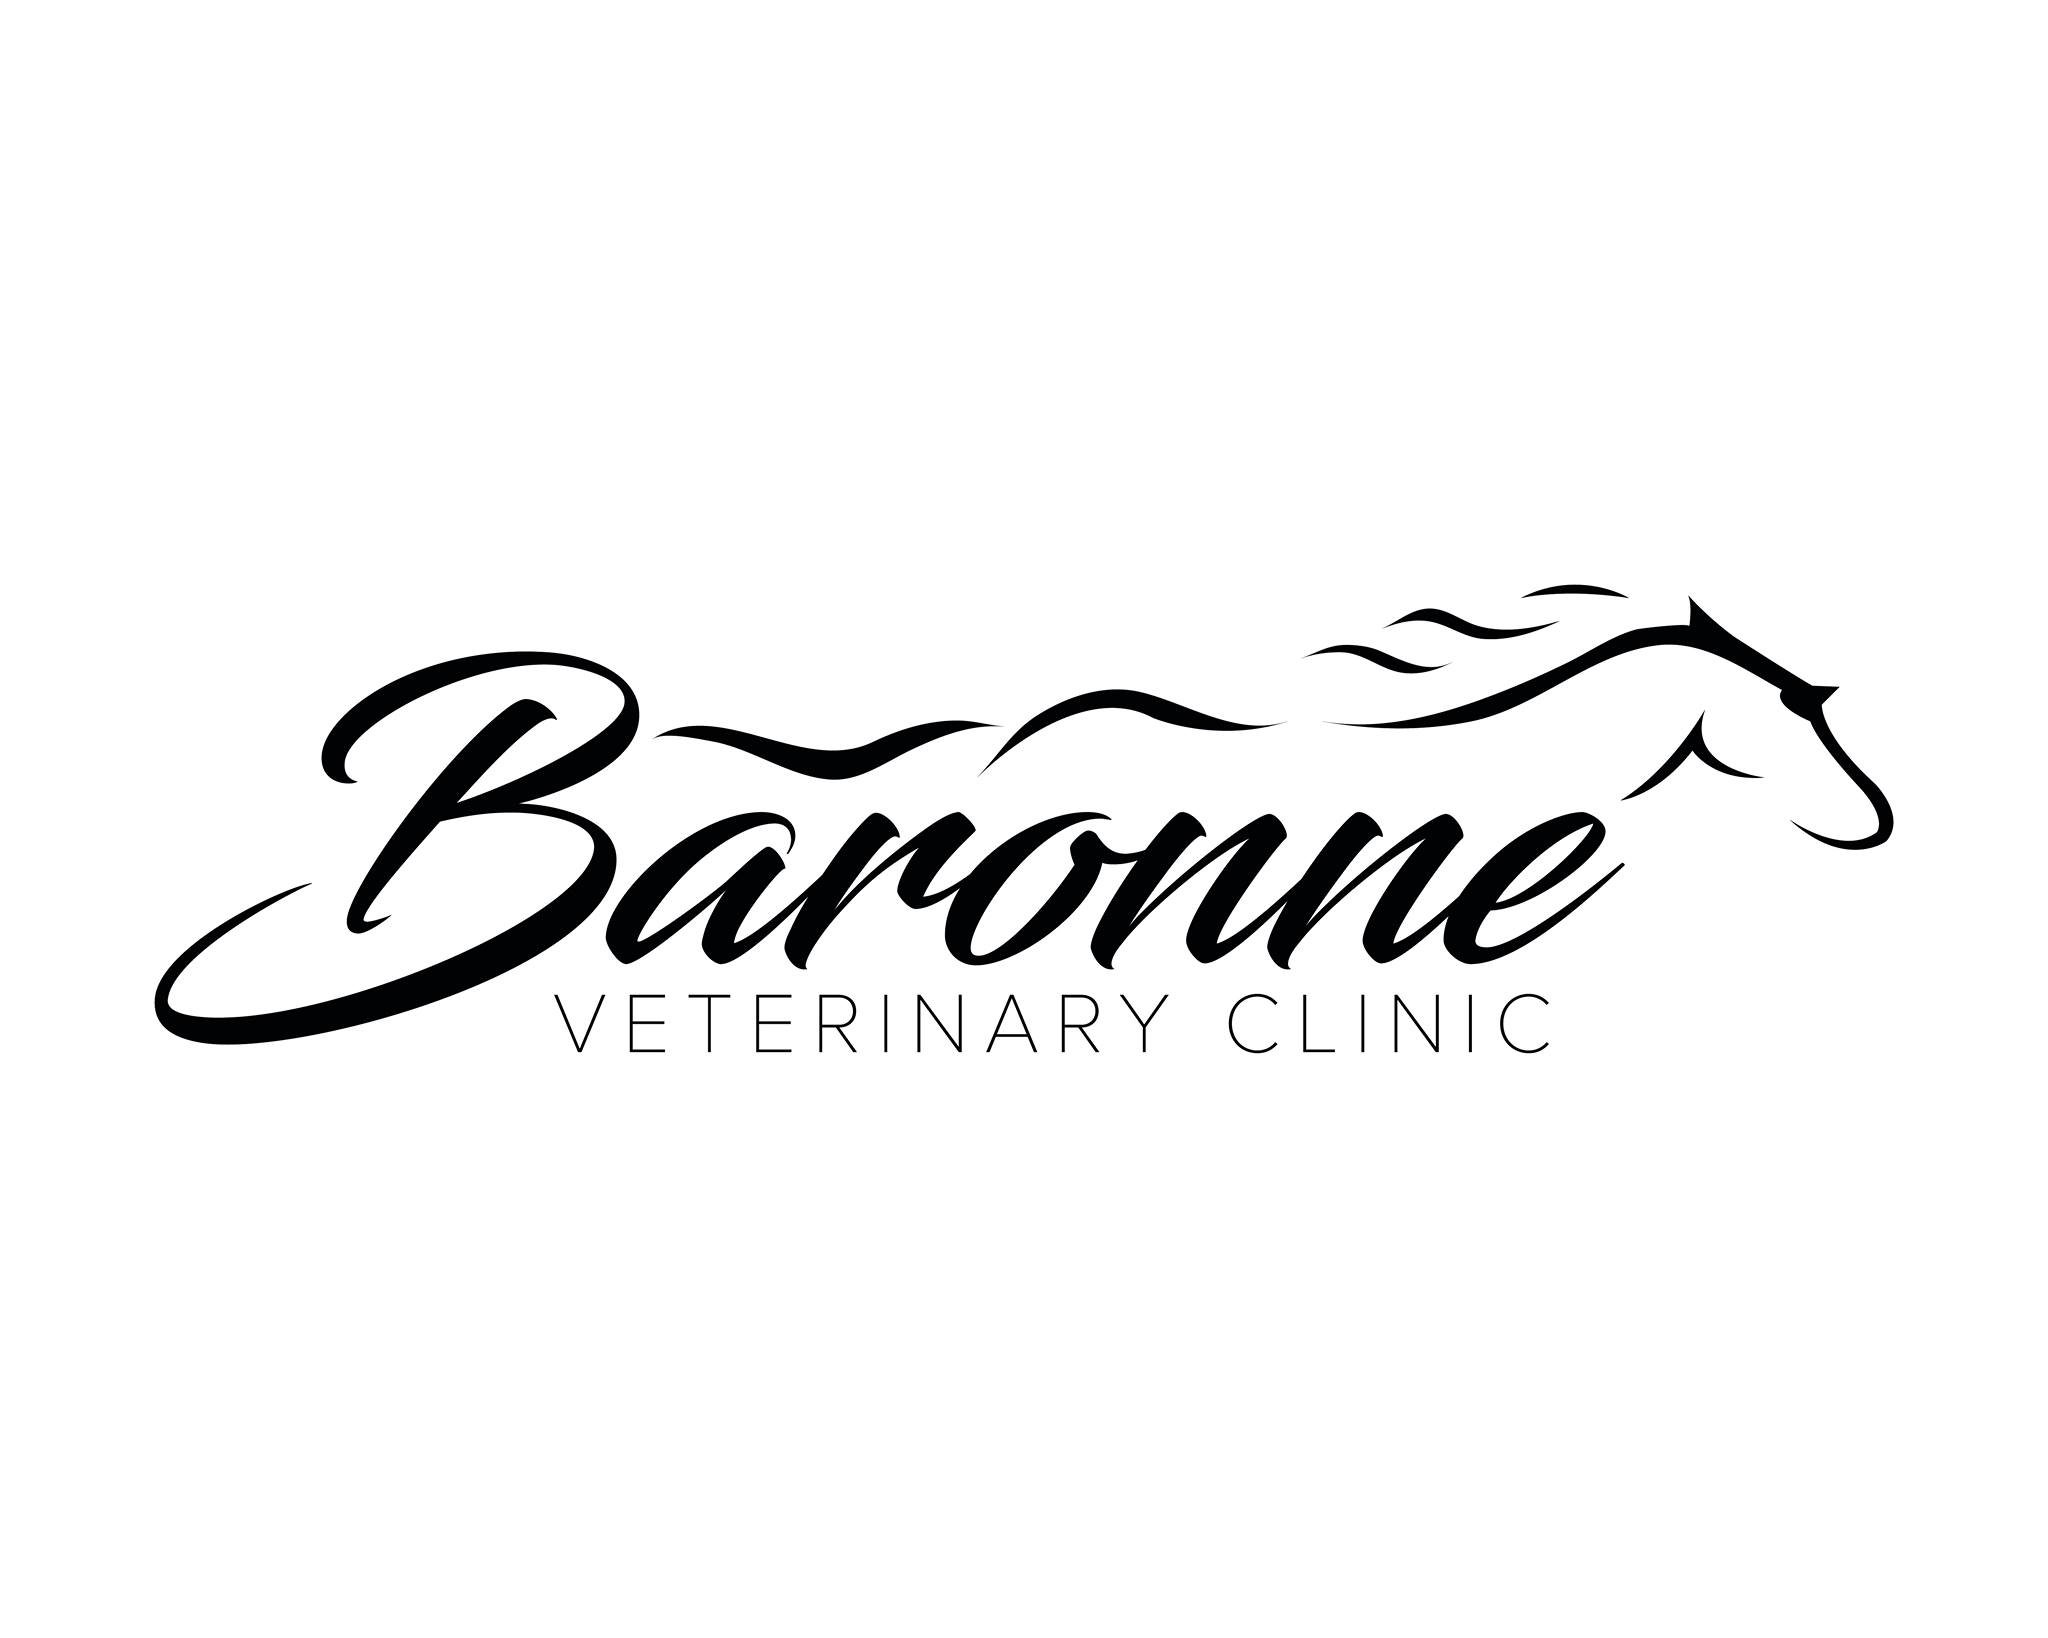 Baronne Veterinary Clinic: Champion Emily DVM 1538 St Charles College Service Entrance, Sunset Louisiana 70584